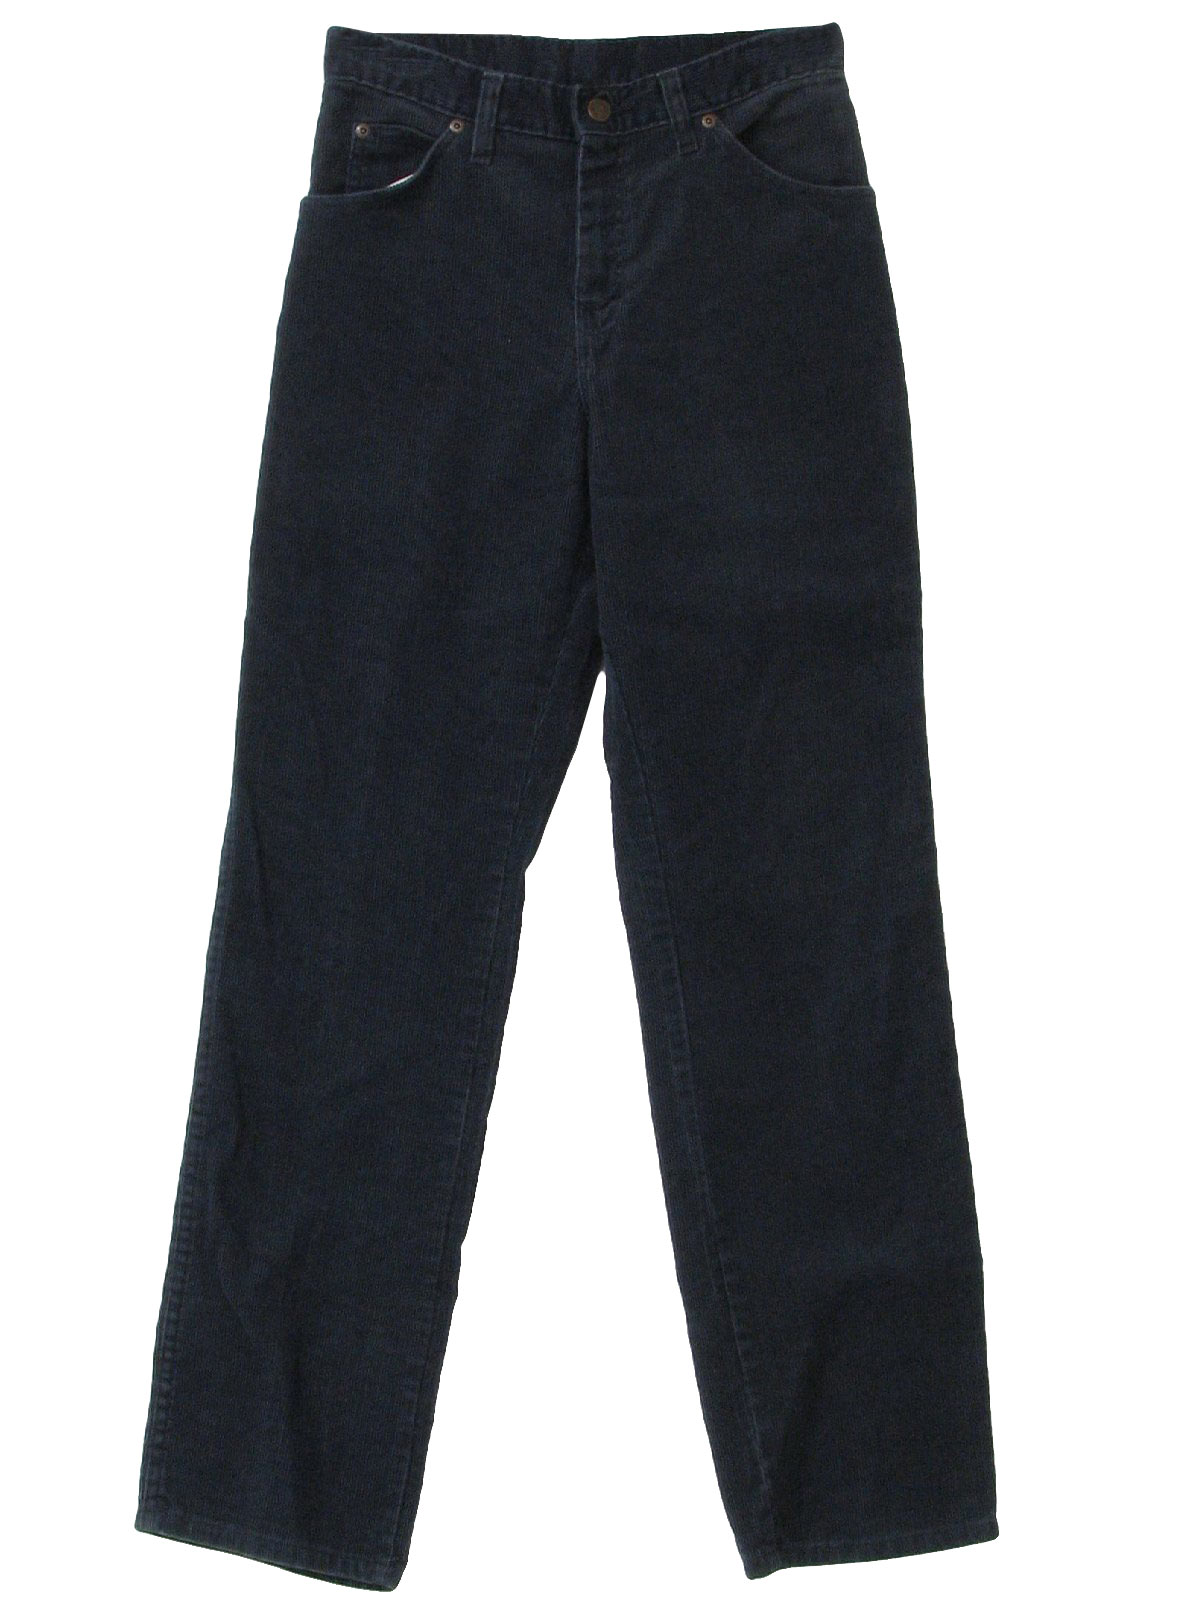 Retro 90s Pants (Dickies) : 90s -Dickies- Mens navy blue cotton ...